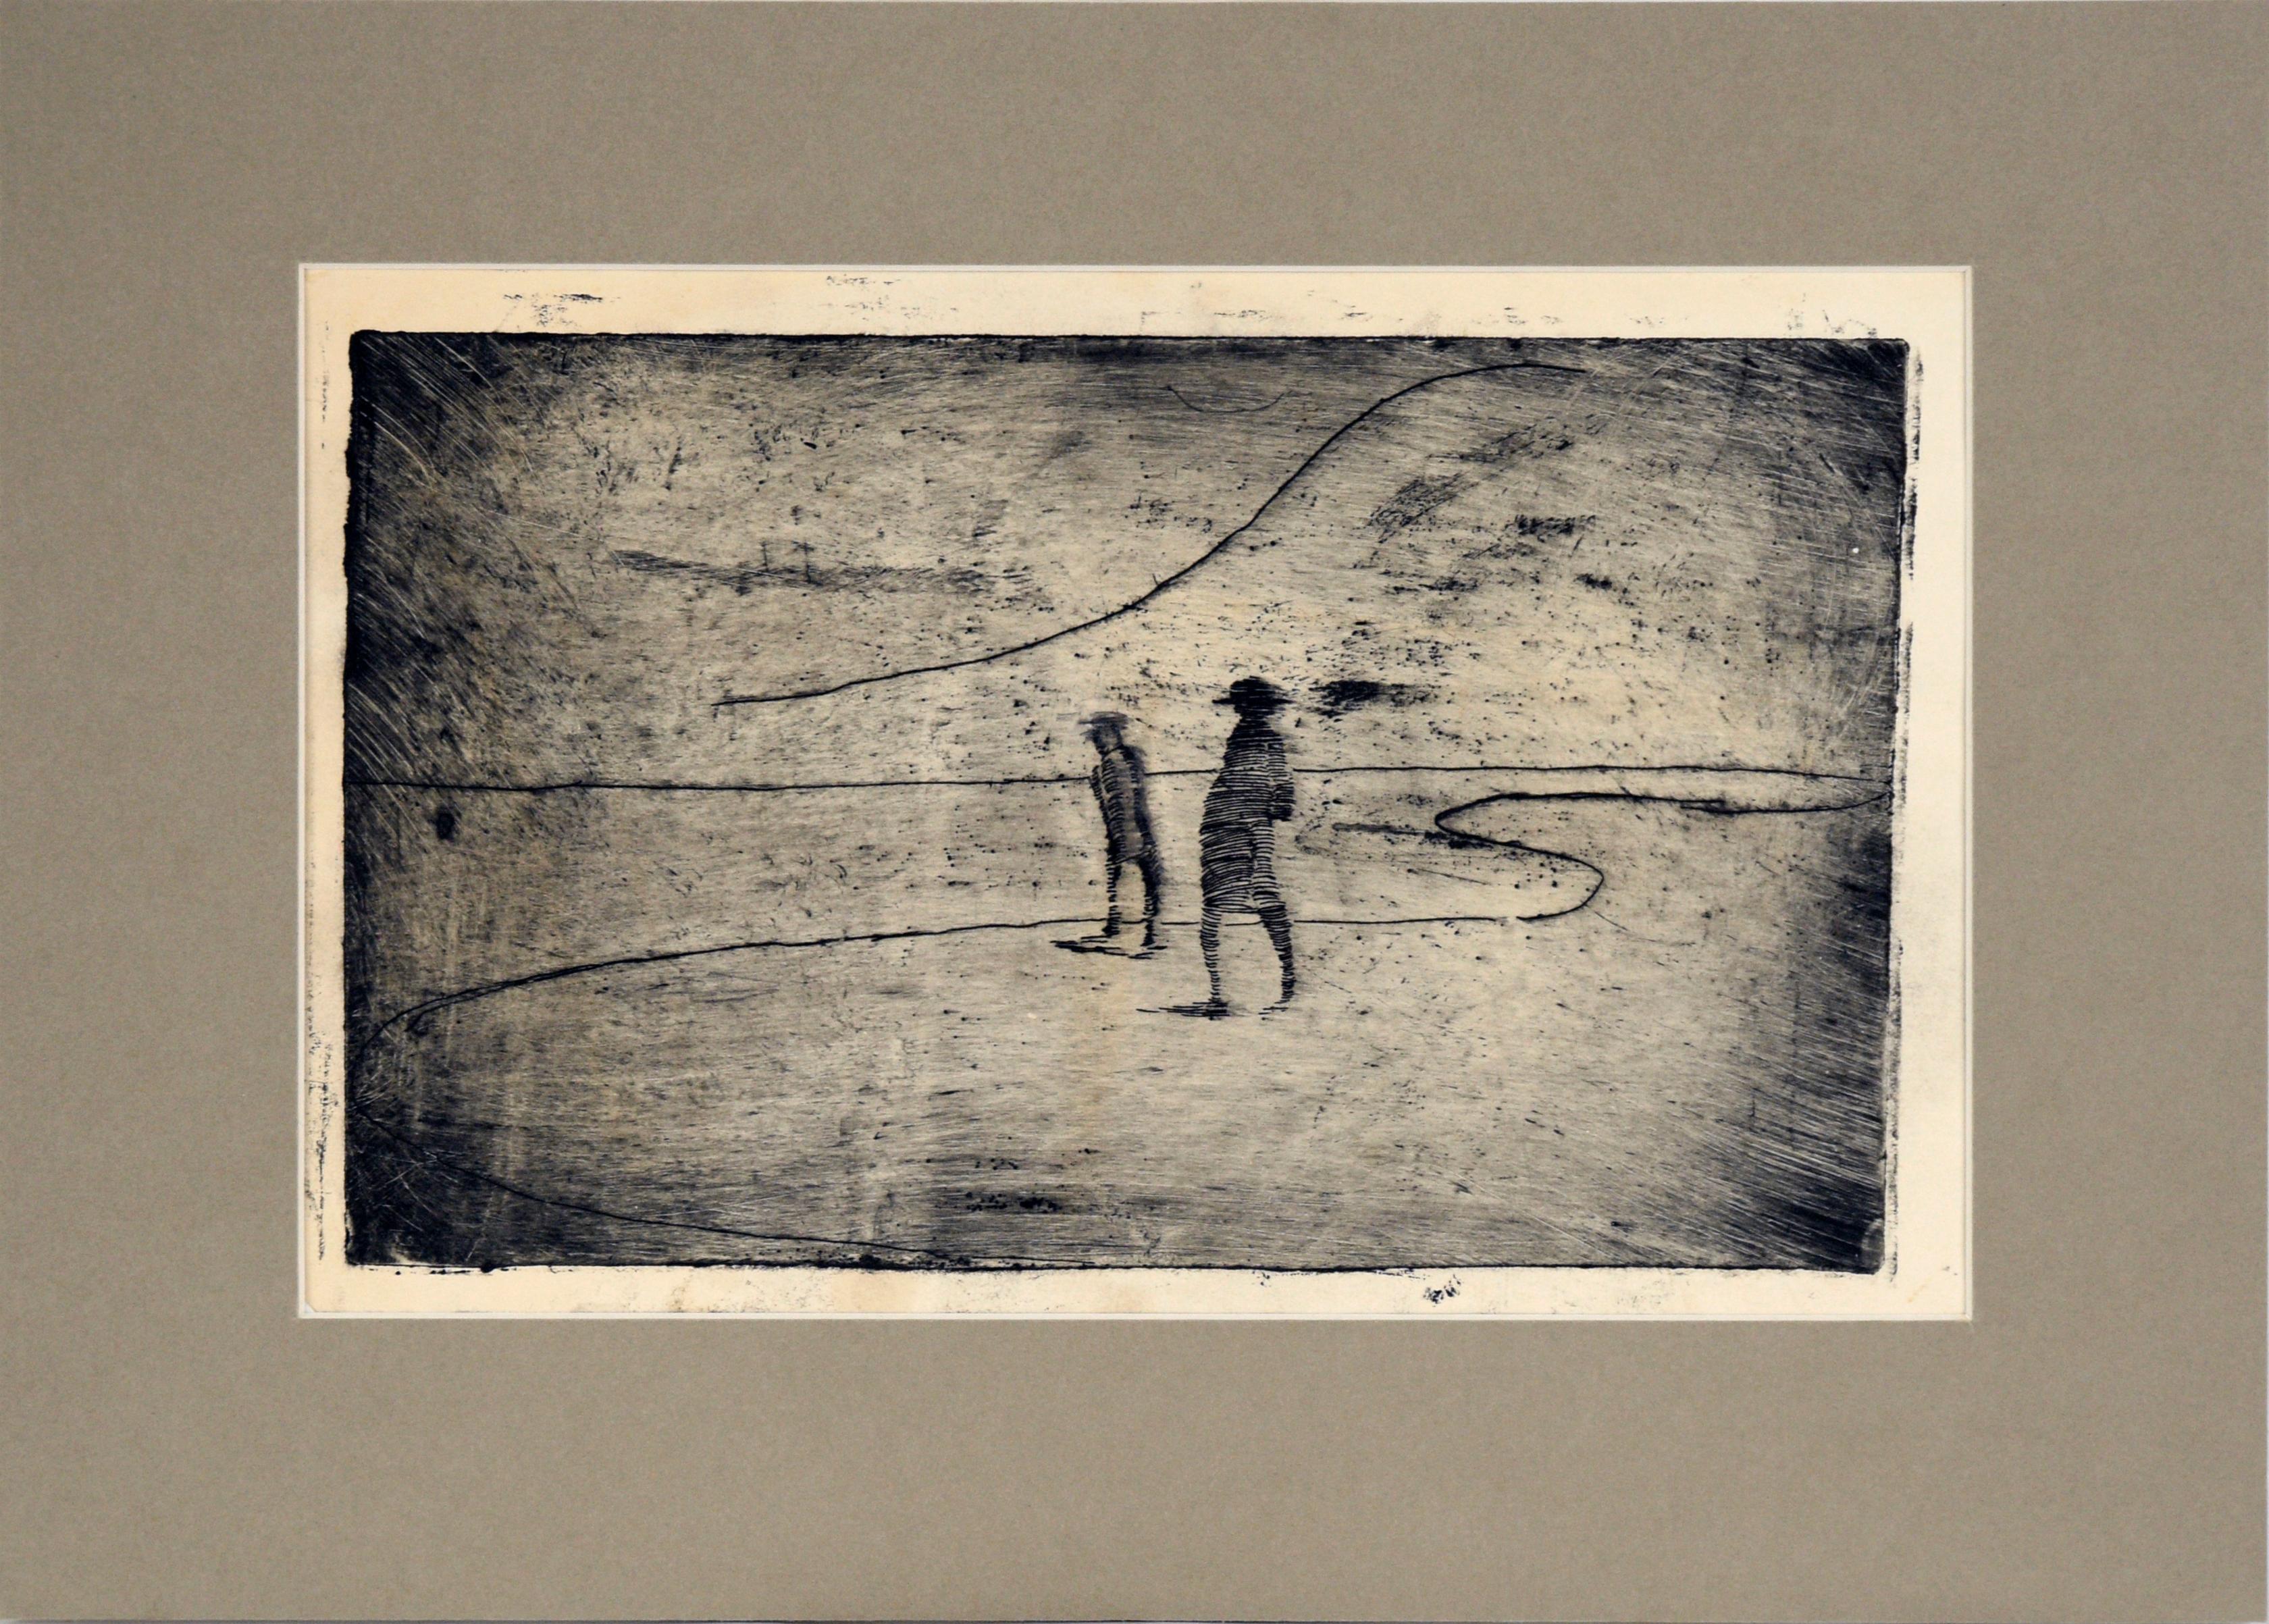 Doris Warner Landscape Print - Two Figures on the Shore - Minimalist Landscape Drypoint Etching in Ink on Paper